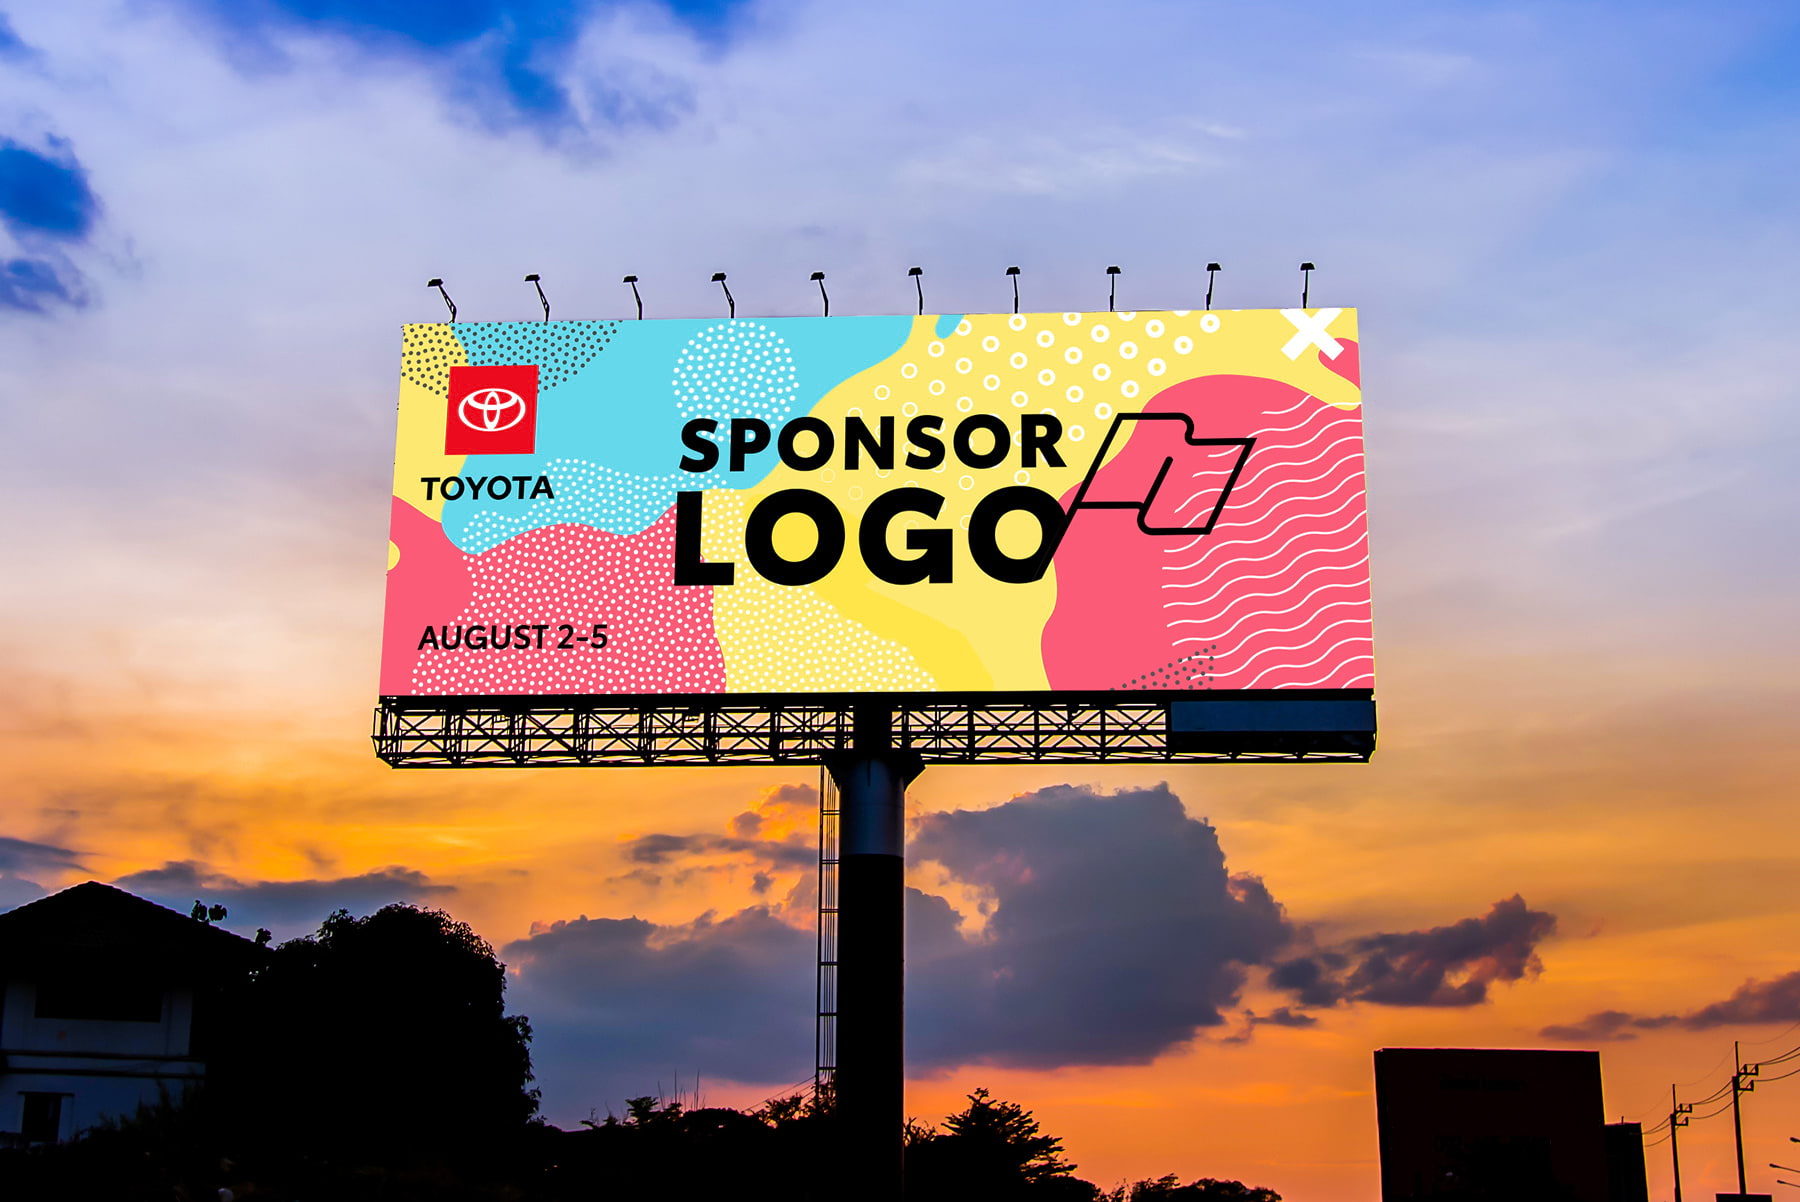 Billboard with Toyota brand logo standing apart from sponsor logo